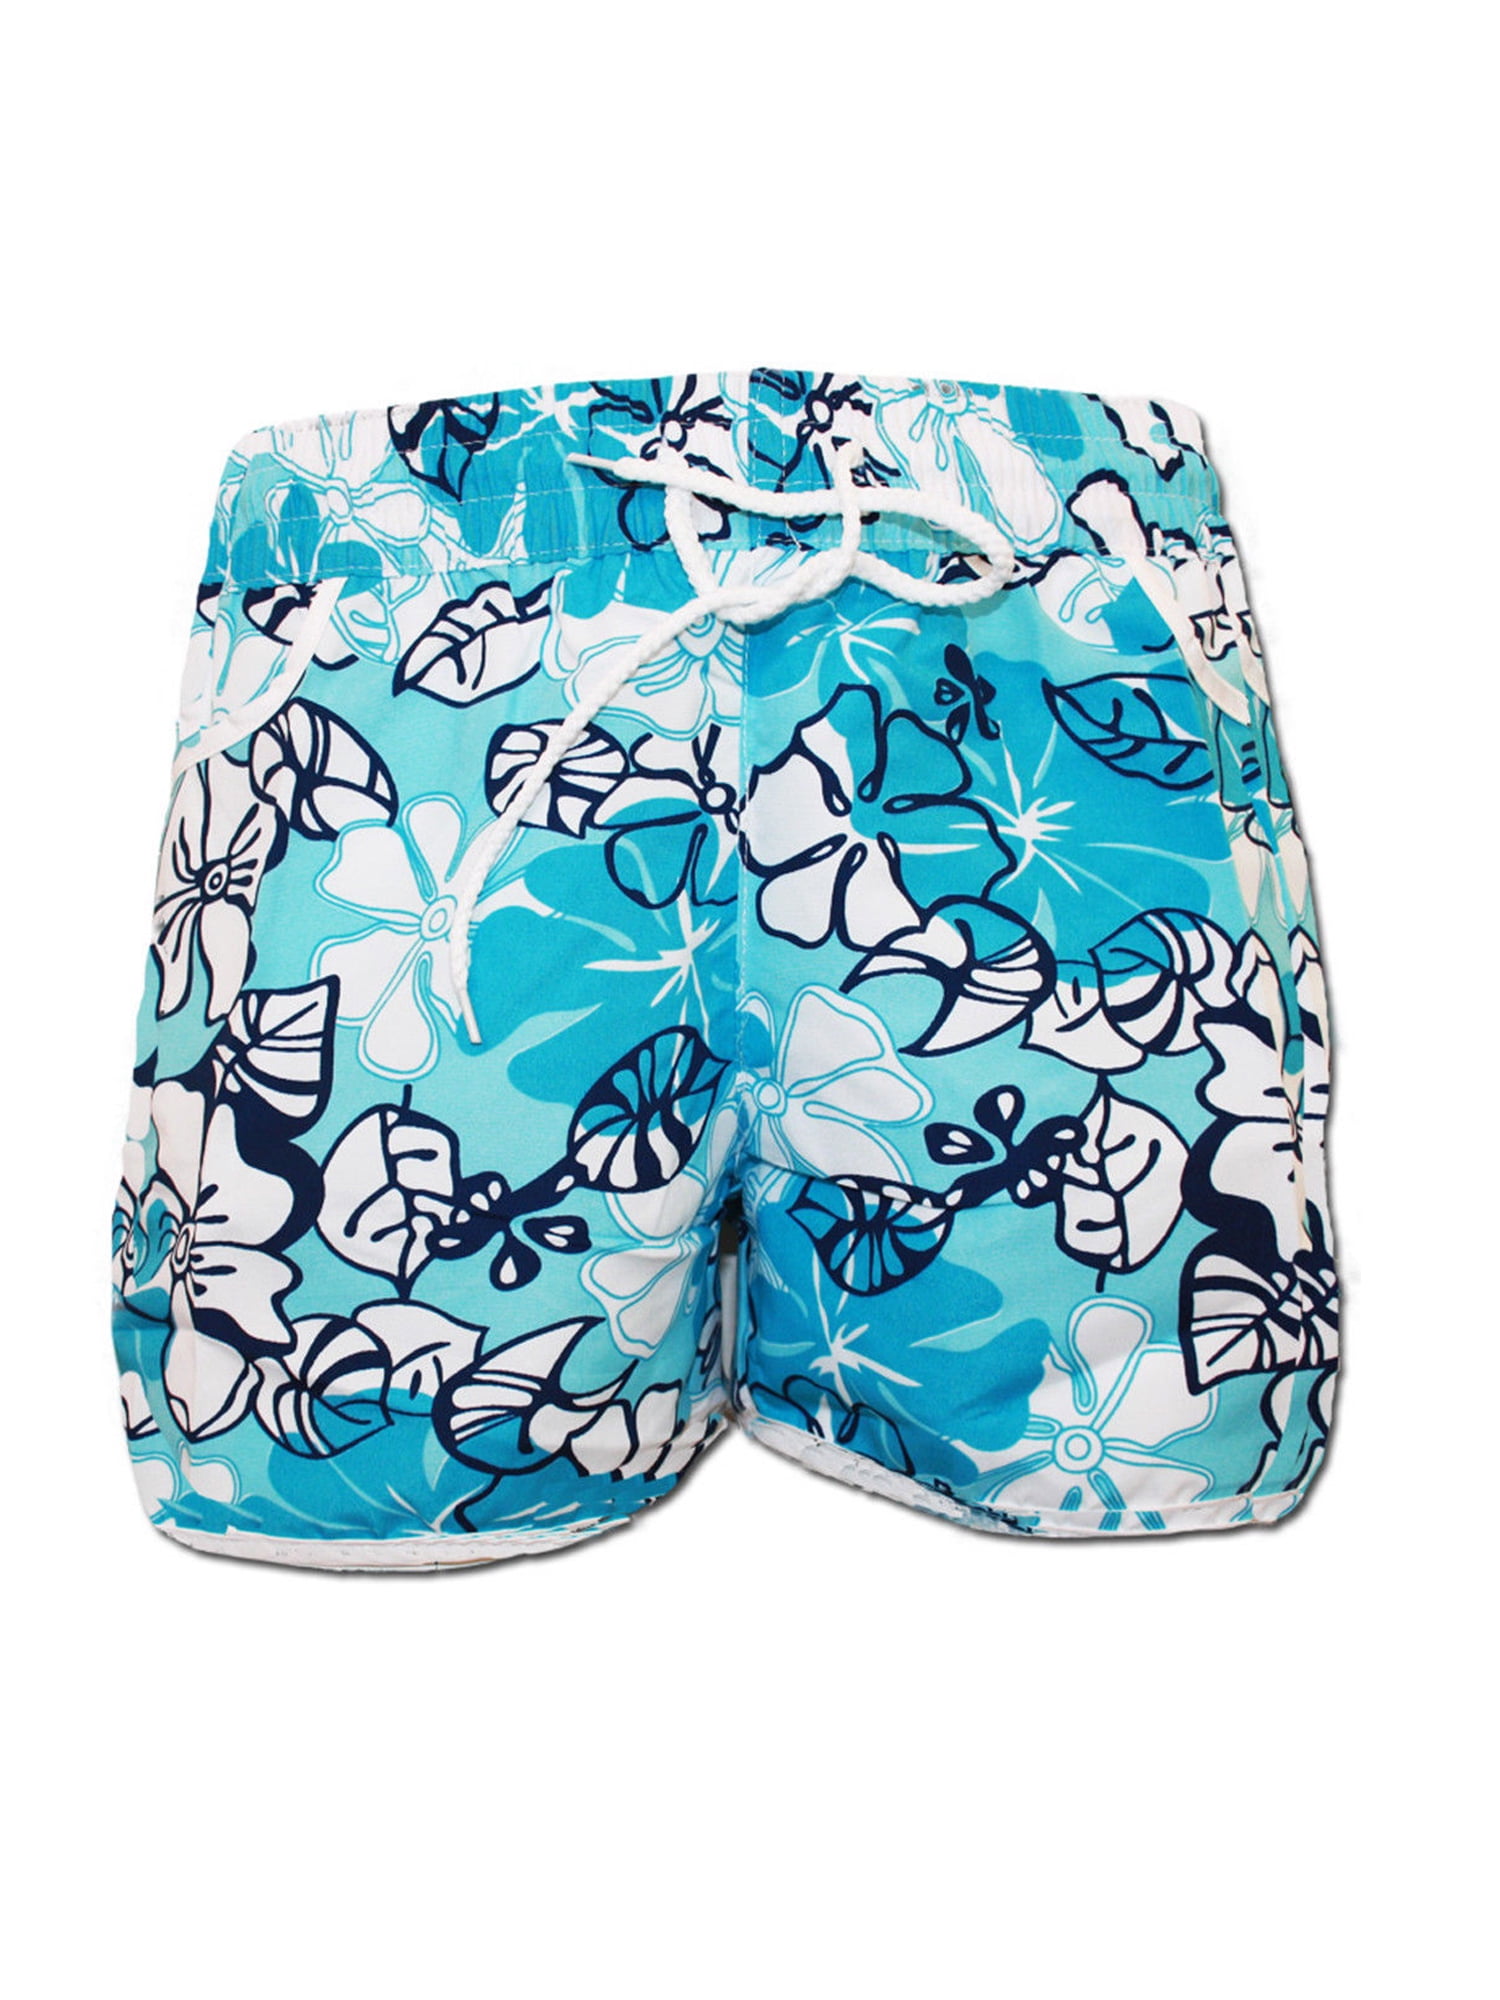 UNICEU Animals Pattern Sport Fashion Beach Pants Womens Quick Dry Summer Boardshorts